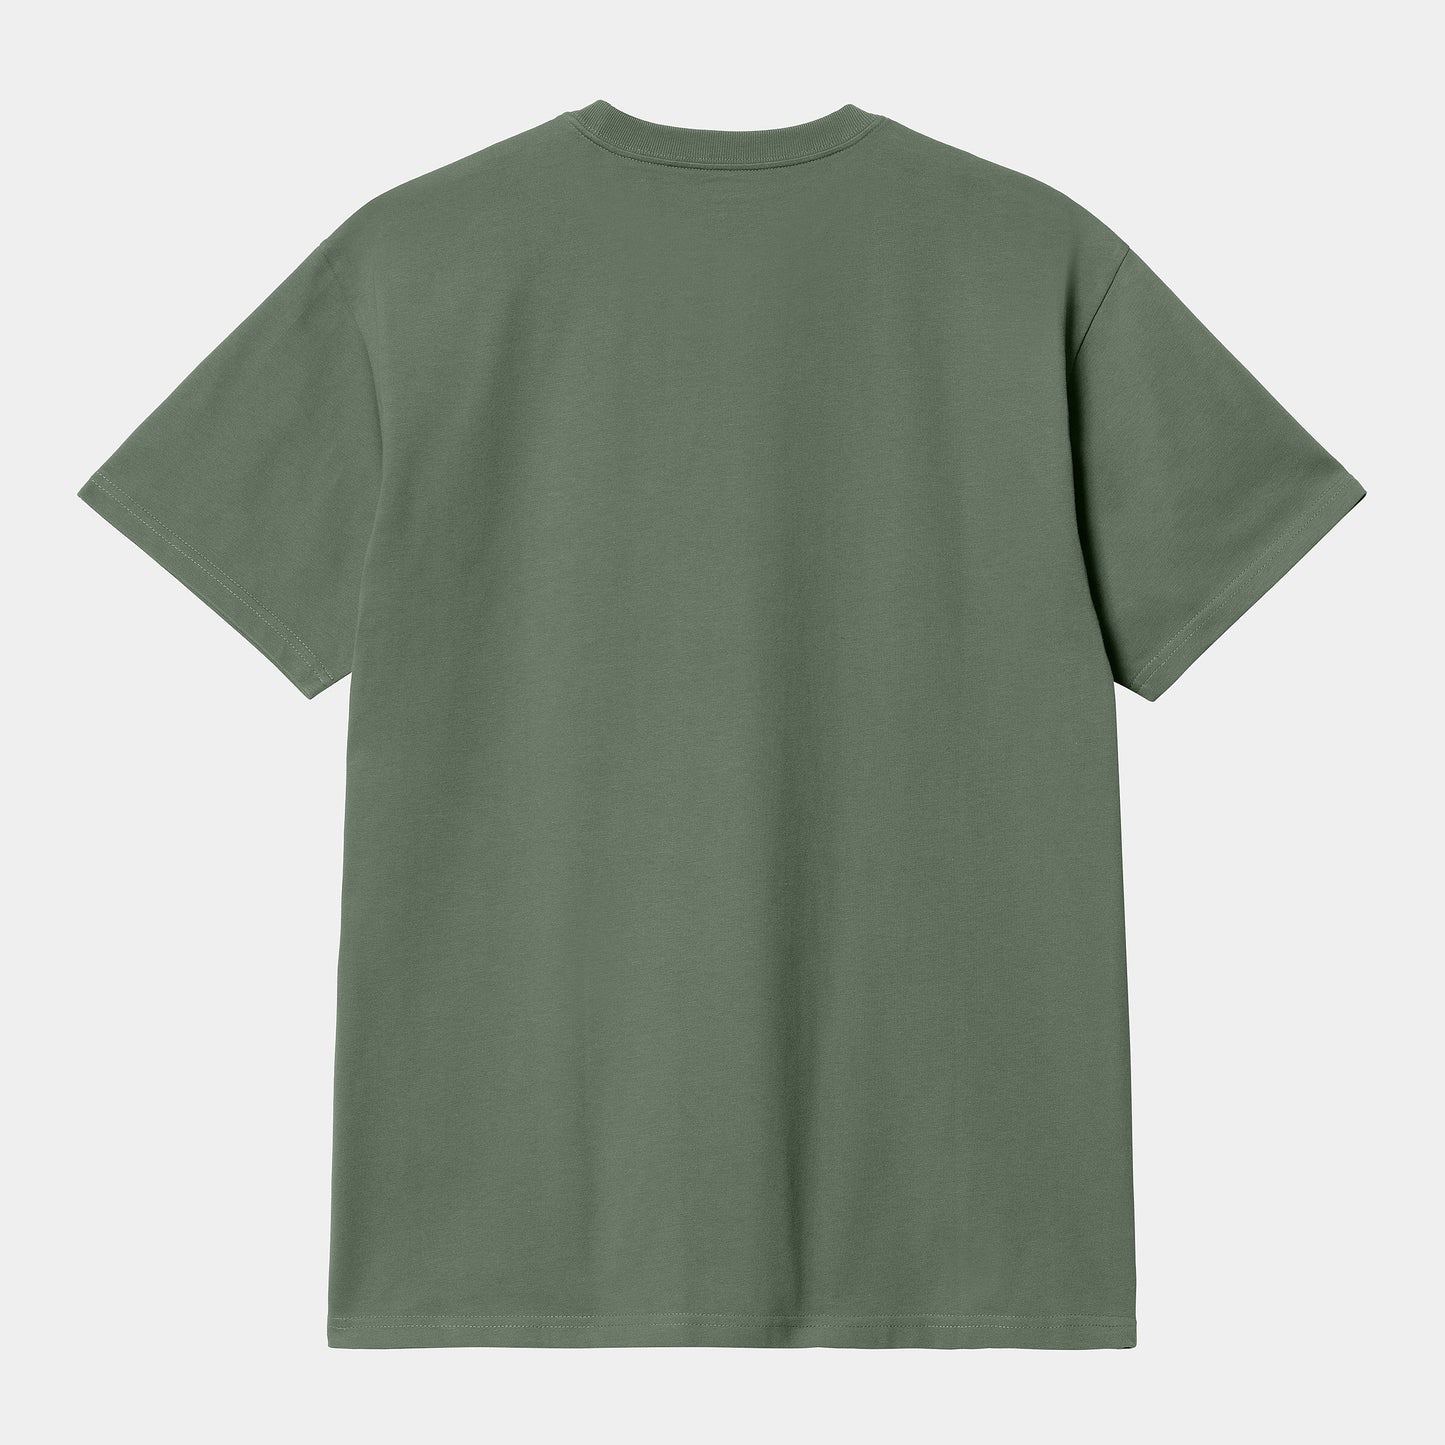 Carhartt WIP Chase T-Shirt Duck Green/Gold